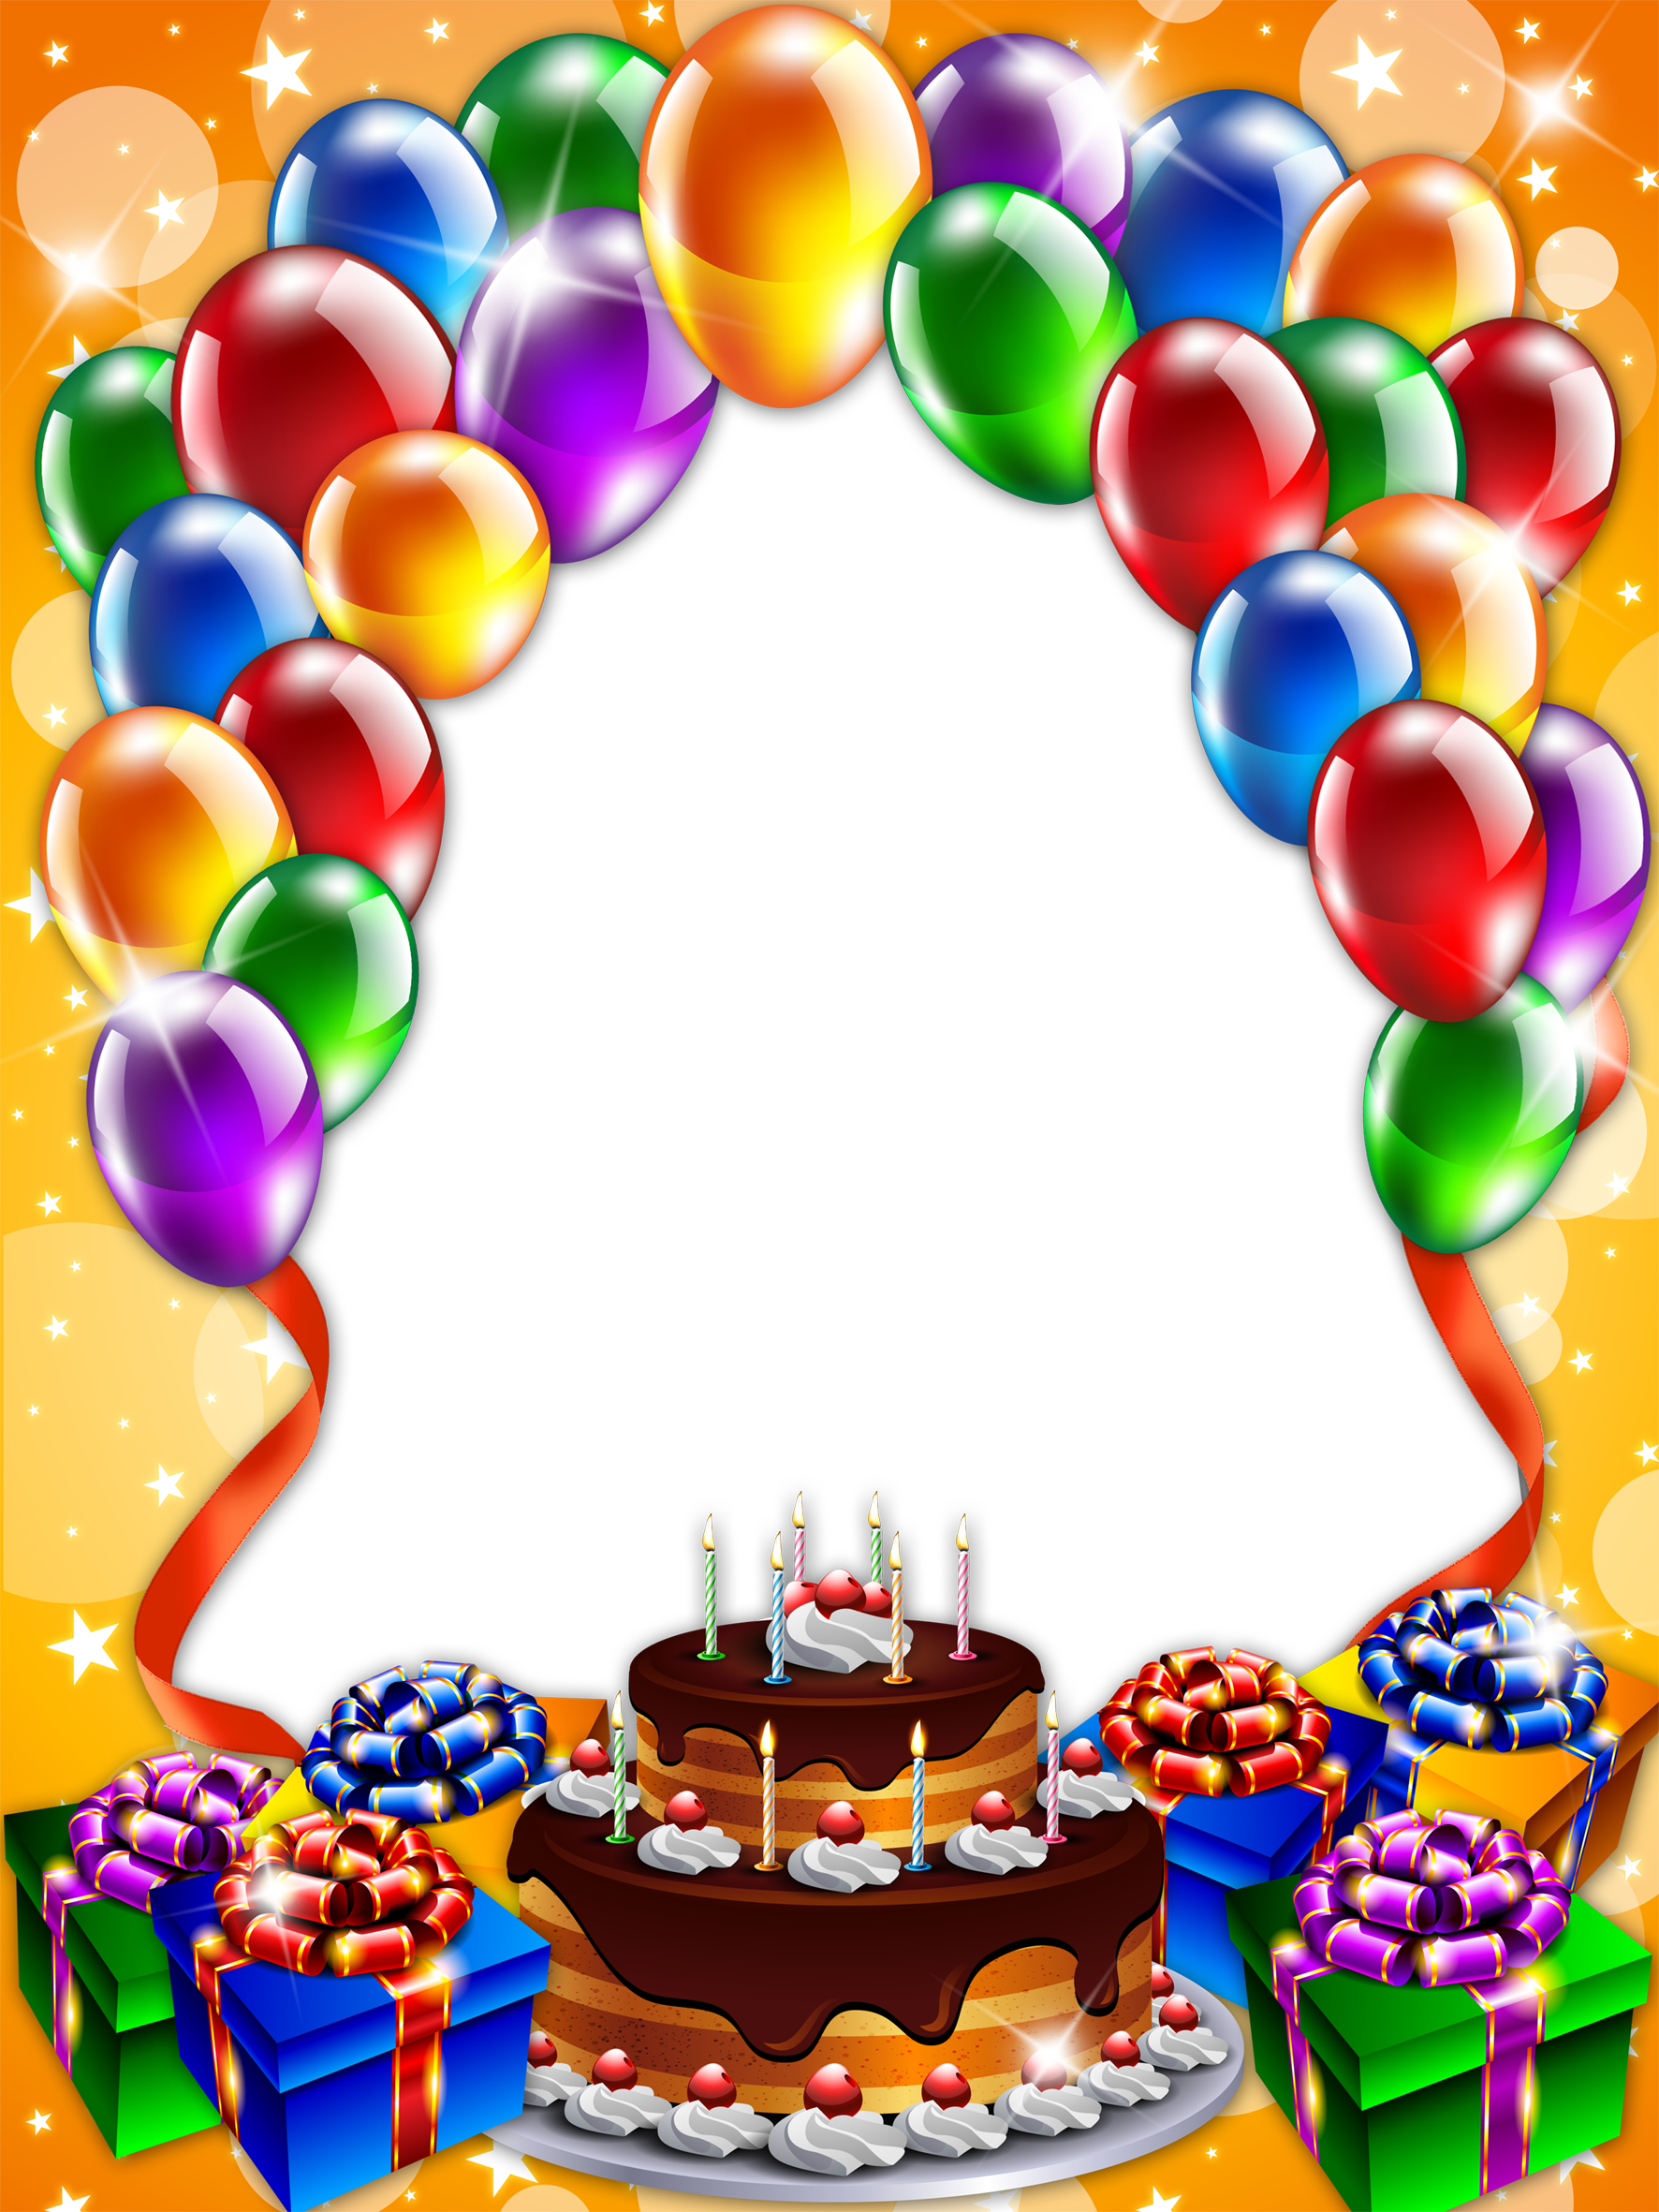 Birthday Frame png image free download